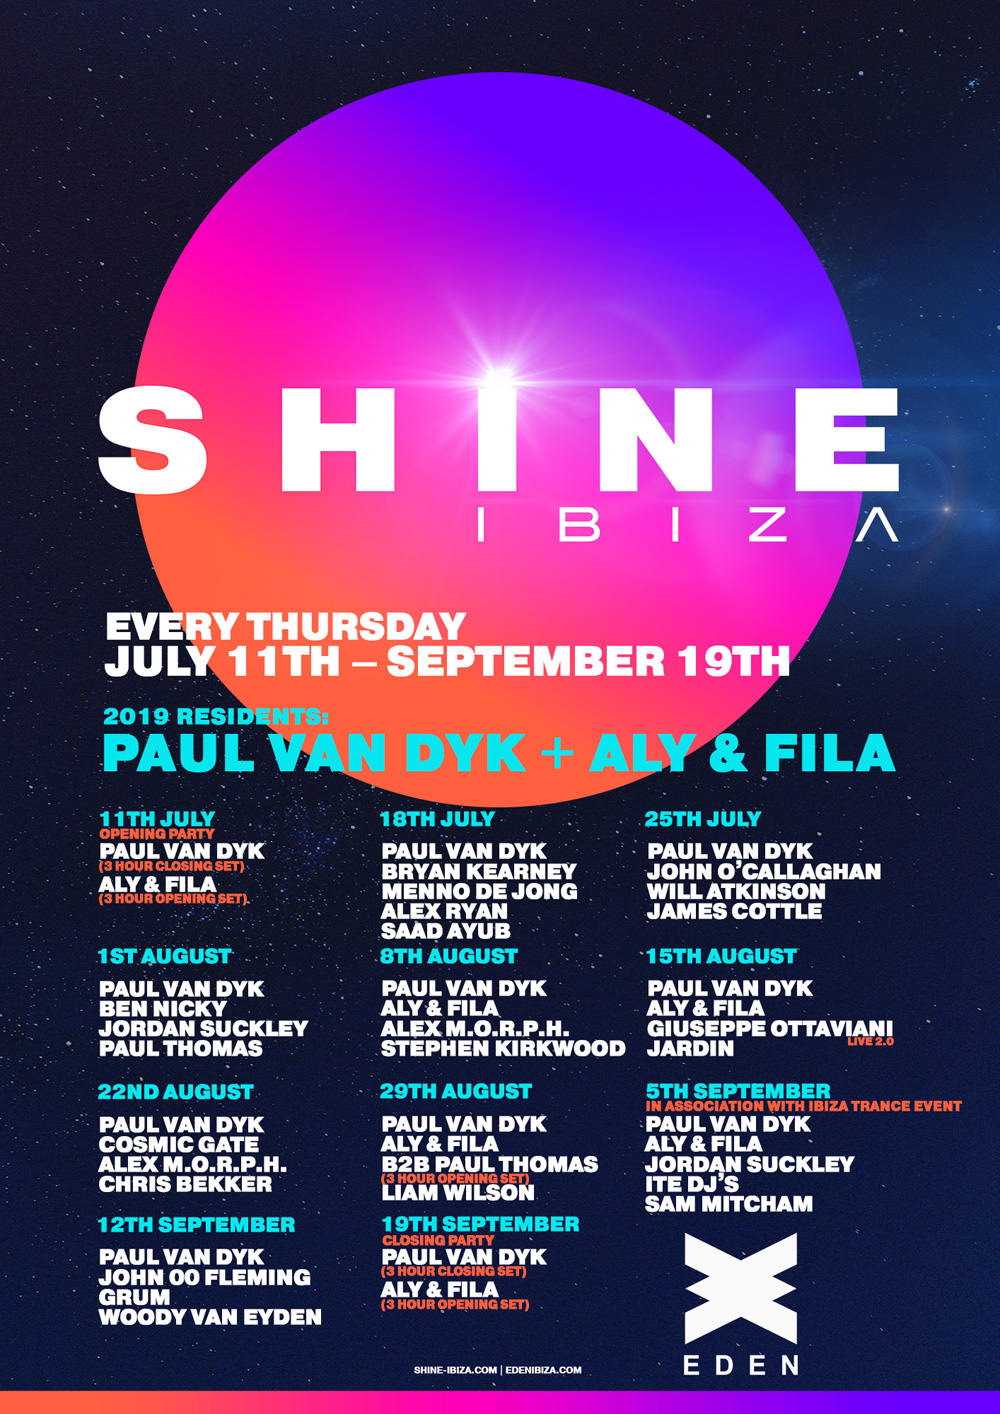 SHINE Ibiza reveals season 2 dates and line up